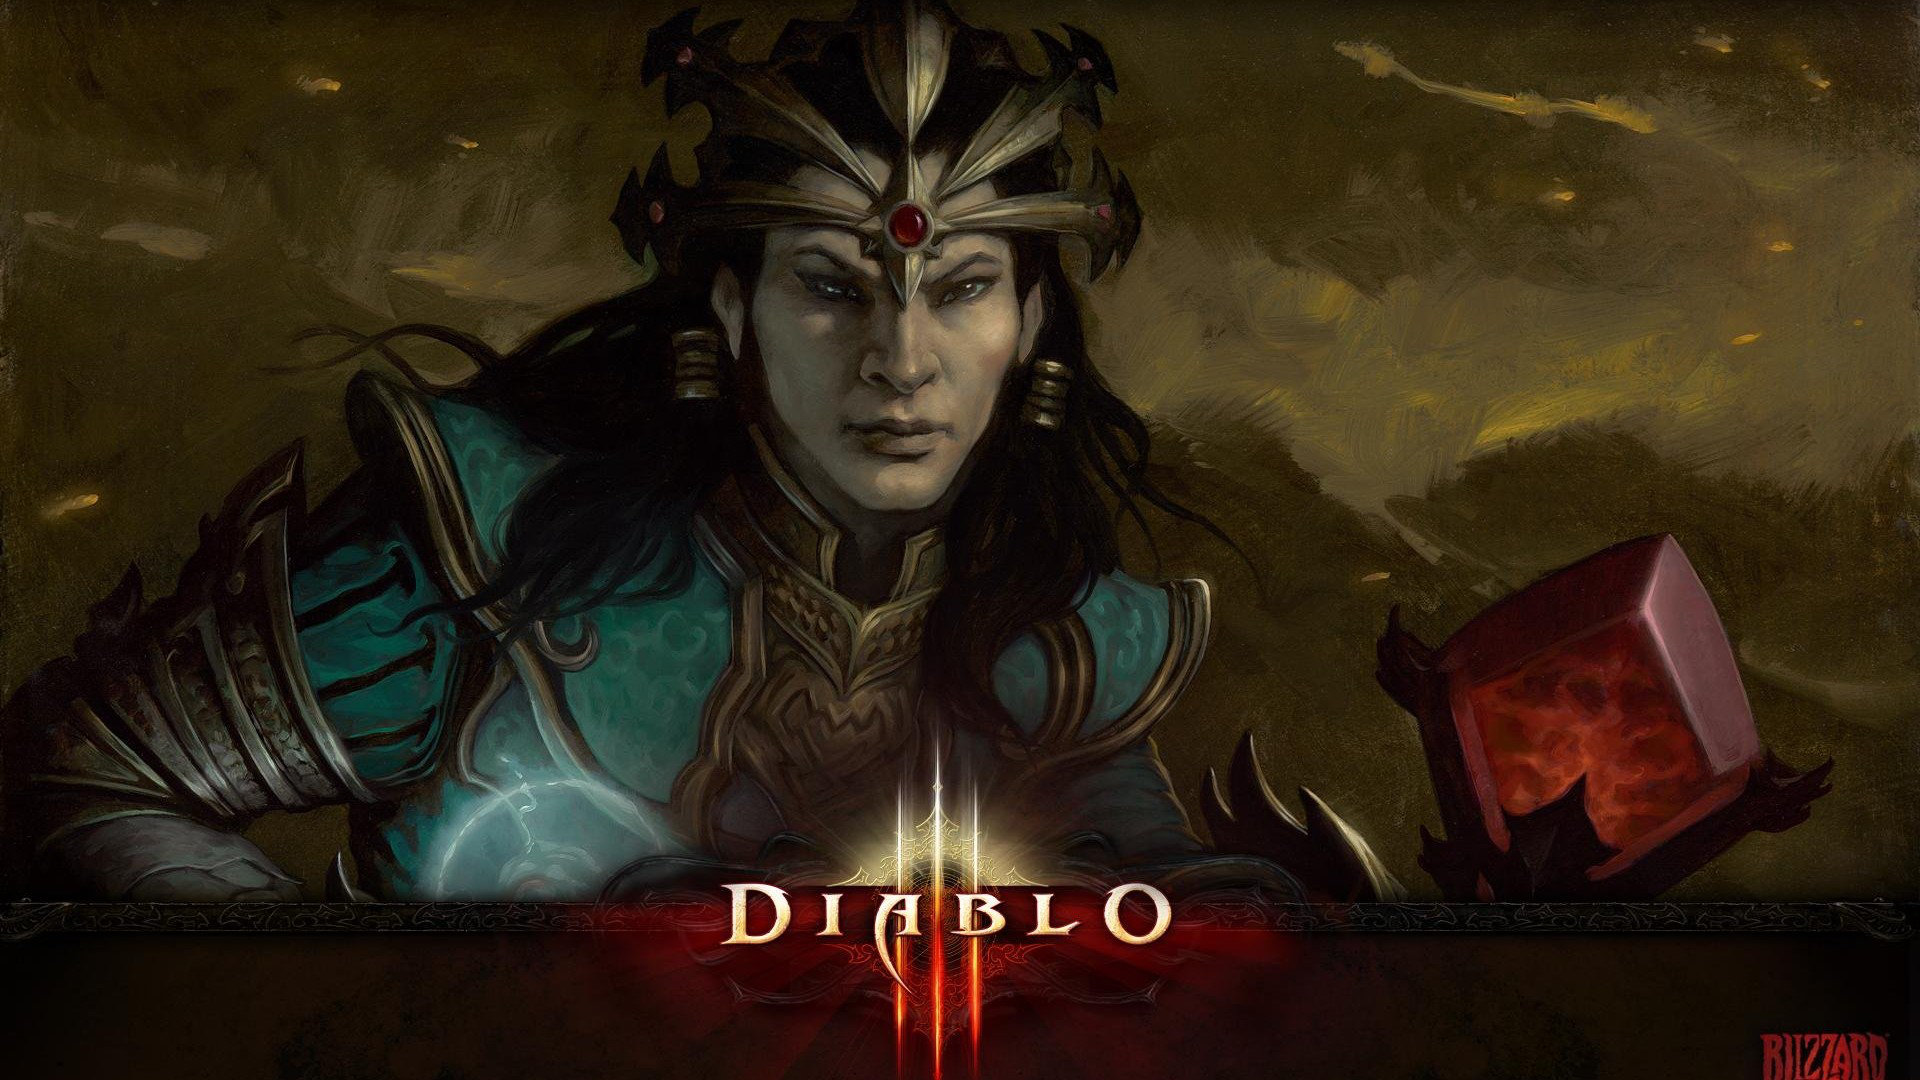 Download 1080p Diablo 3 PC wallpaper ID:31036 for free